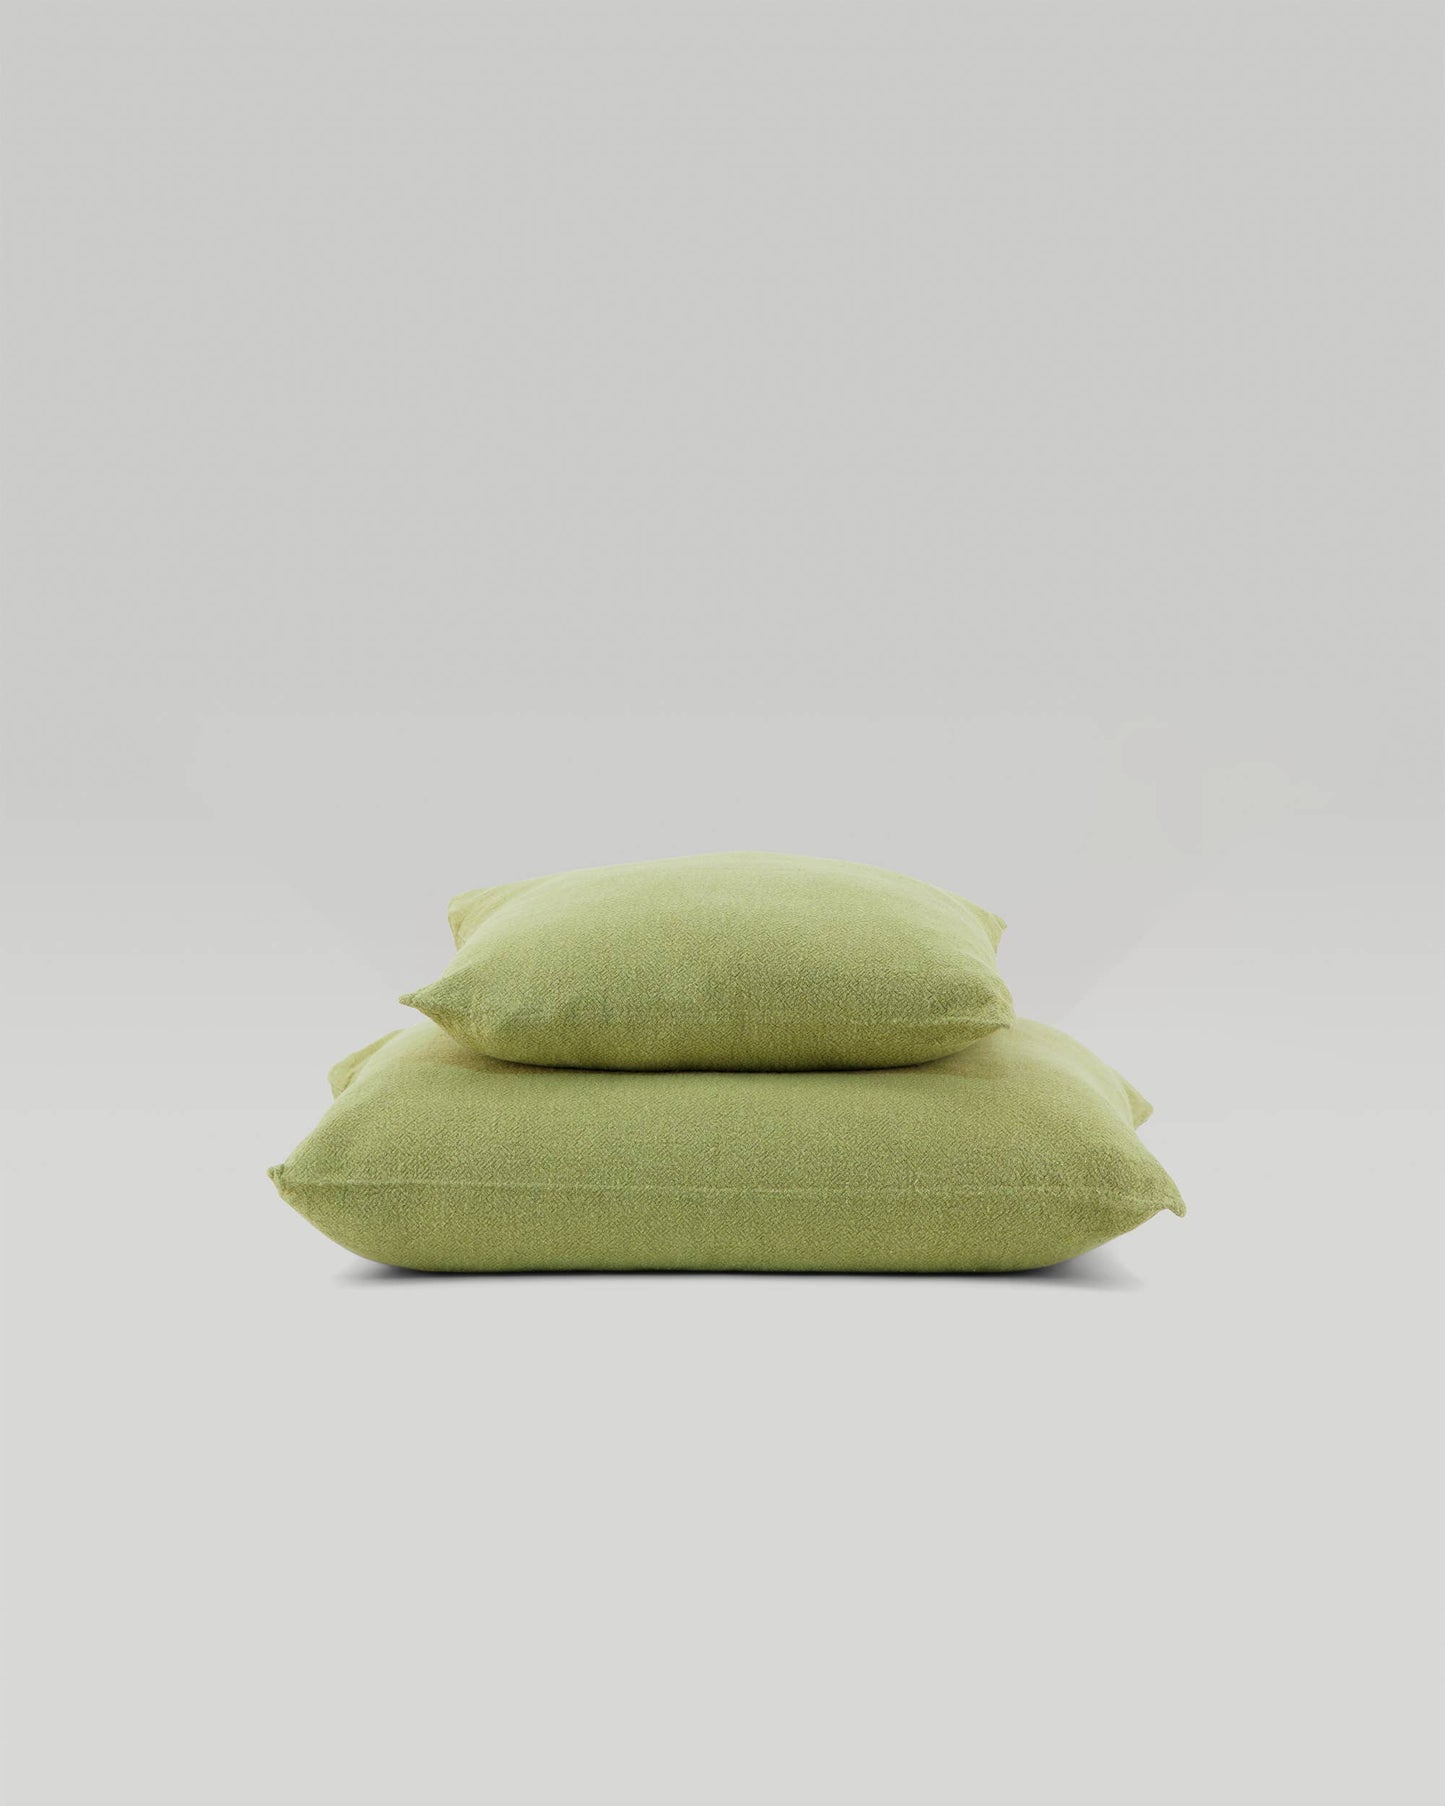 The Raw Linen Cushion